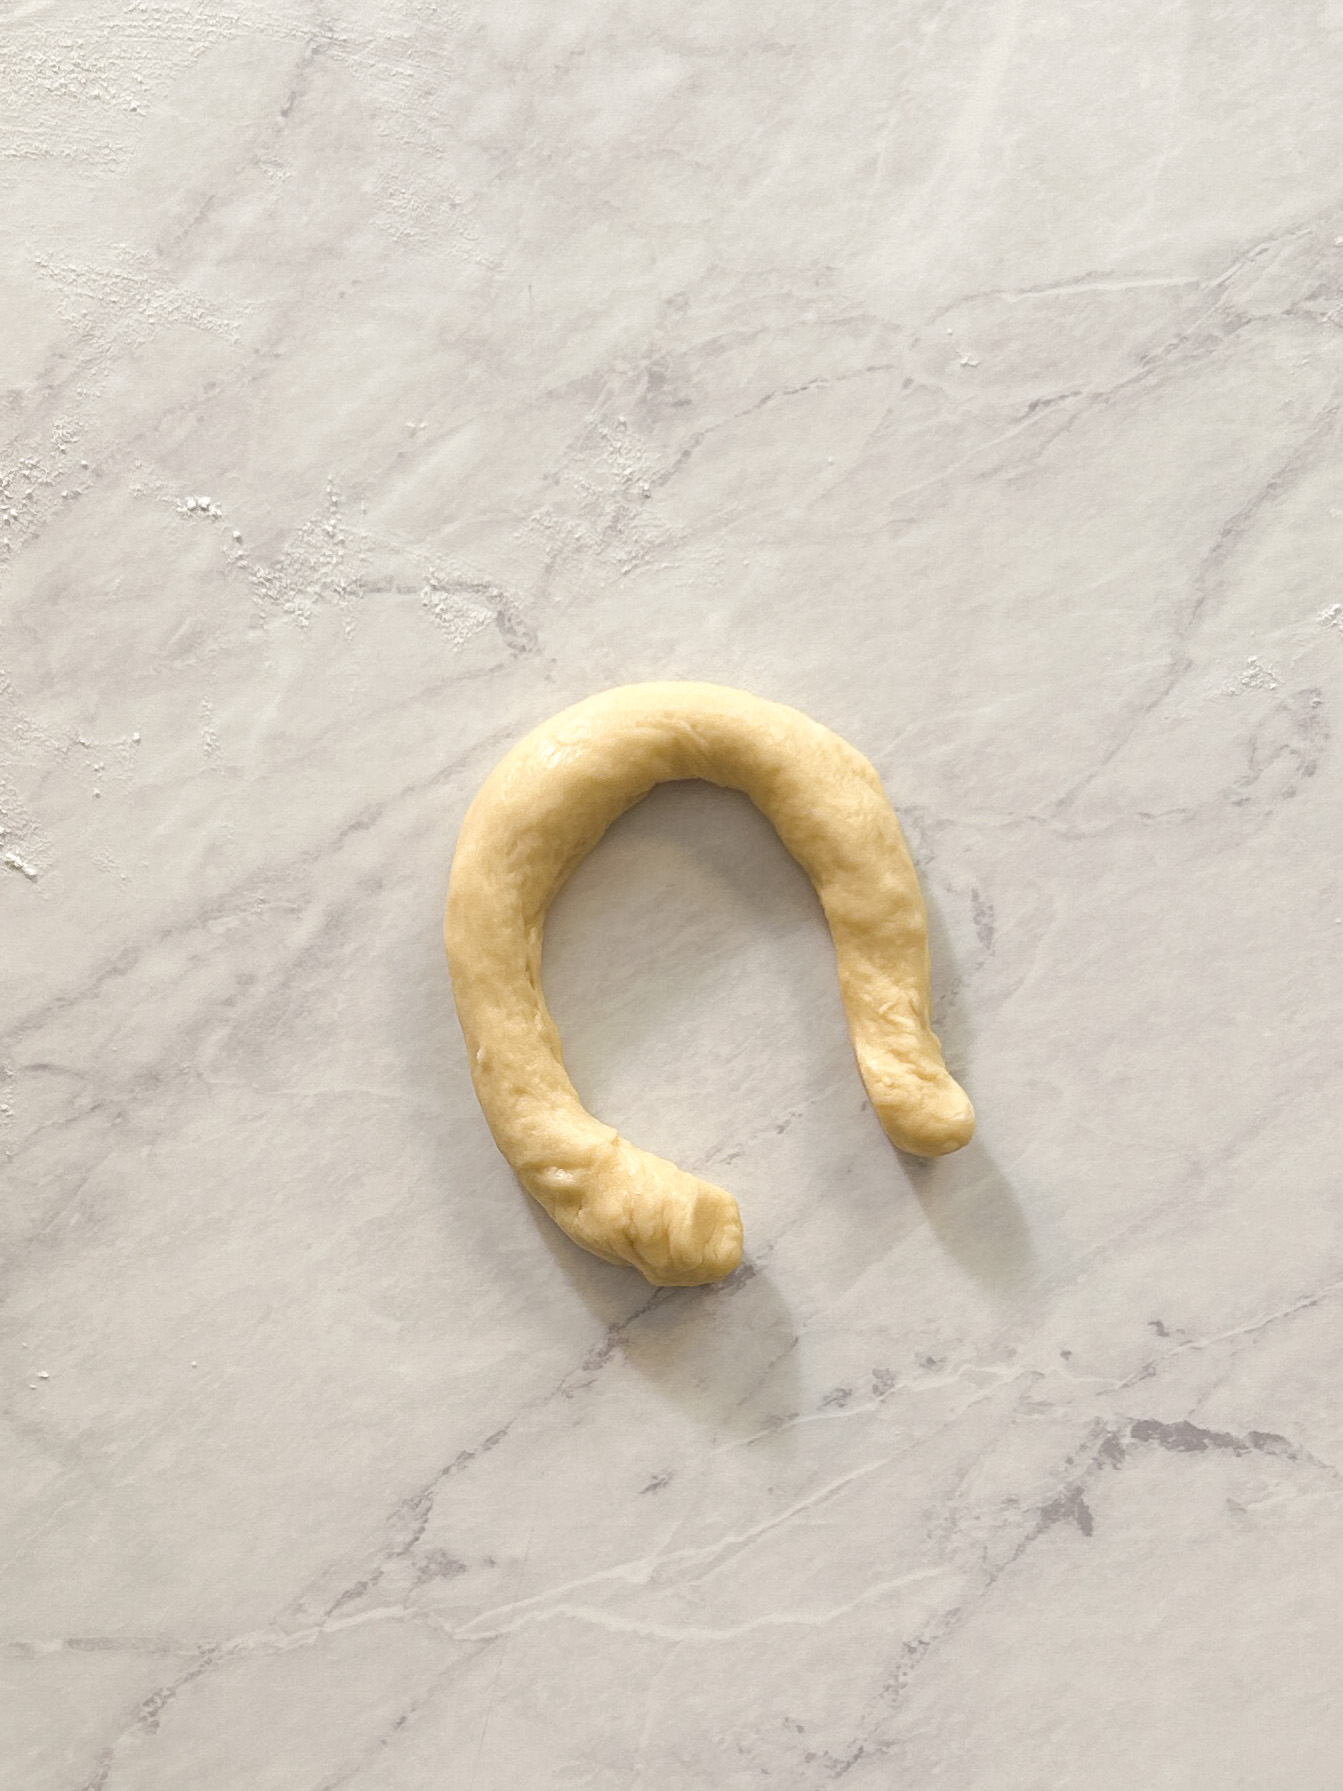 strip of dough shaped into a U